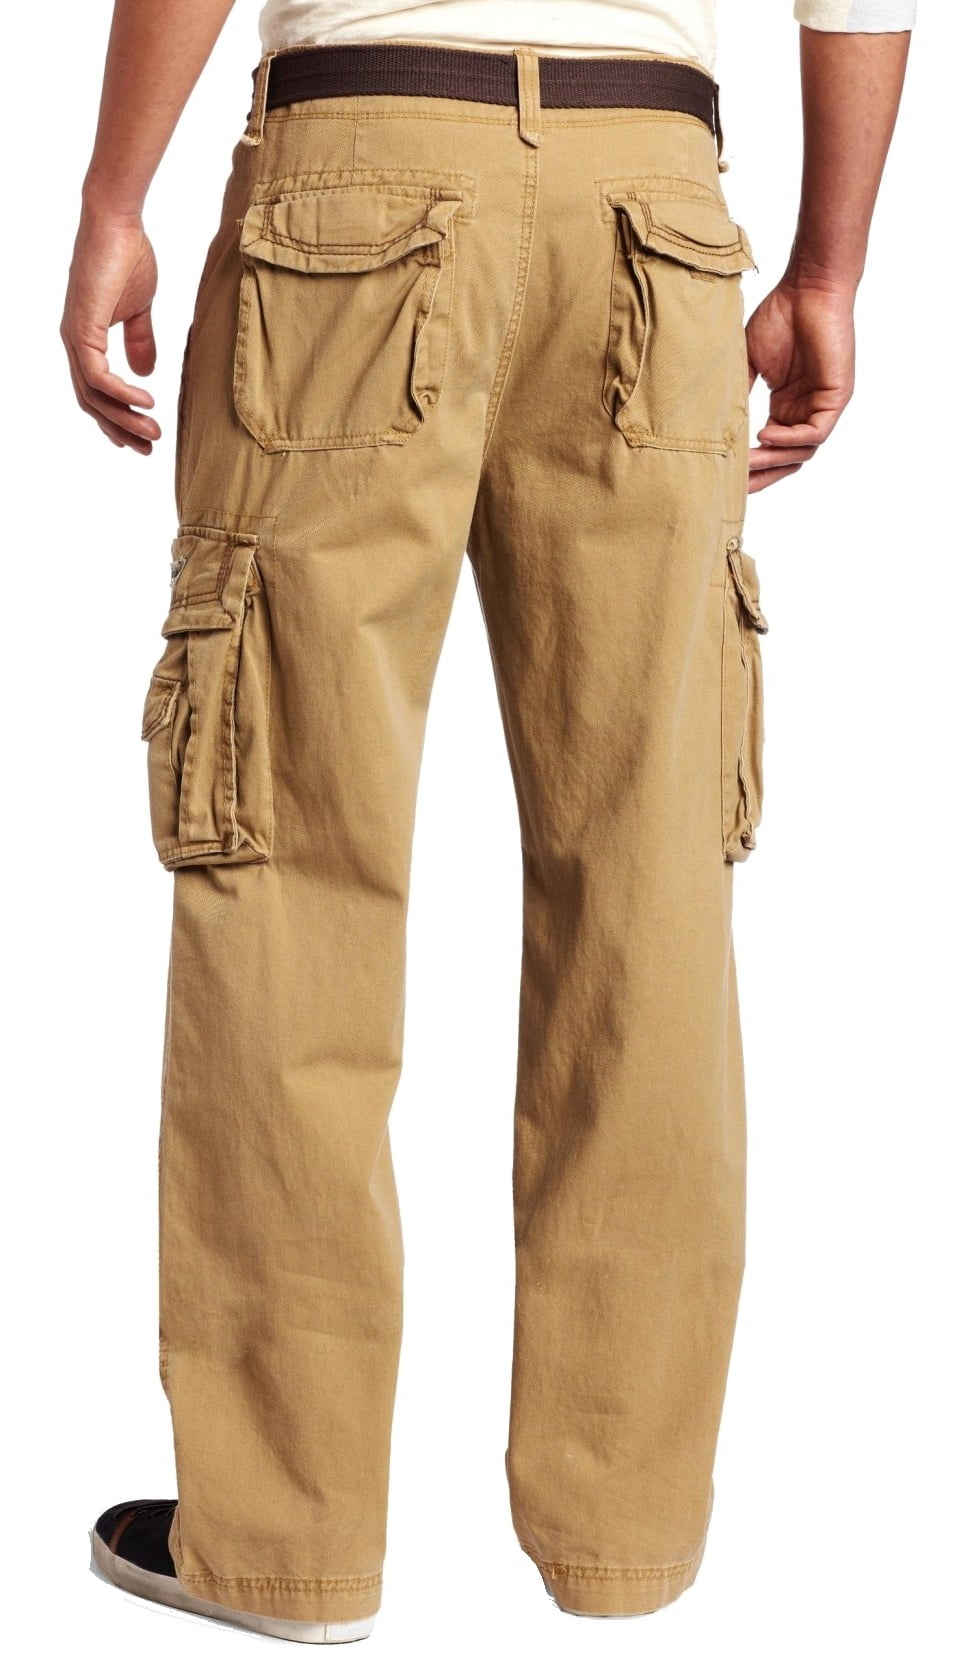 UnionBay Mens Cargo Pants Black Size 34X32 With Belt | eBay